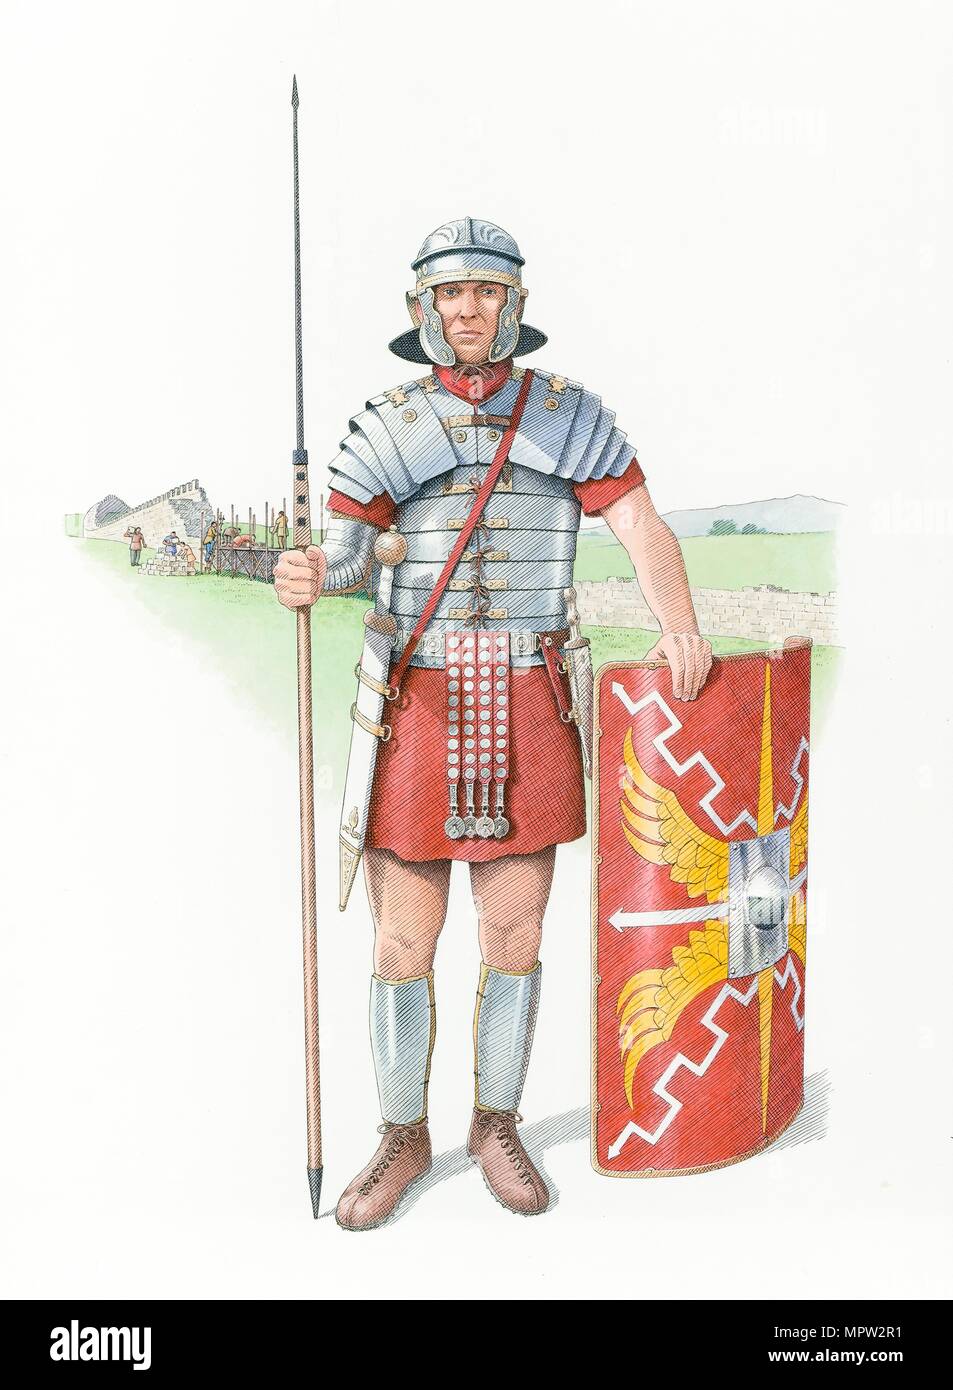 Roman legionary soldier, c120 (2014). Artist: Nick Hardcastle. Stock Photo